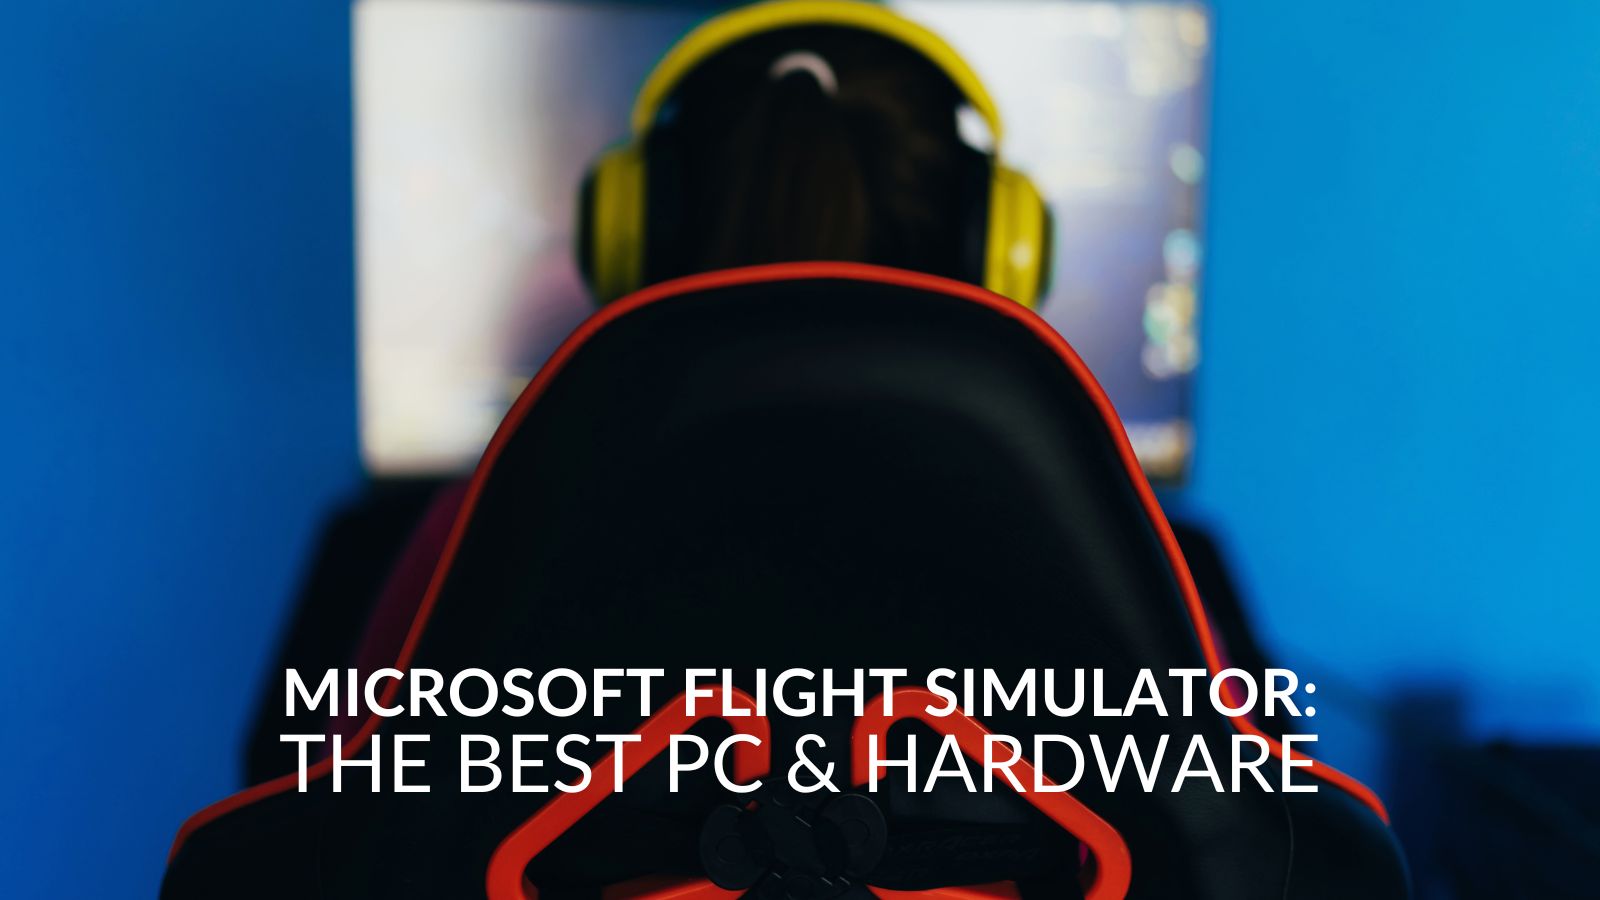 The Best Hardware & PC for Microsoft Flight Simulator